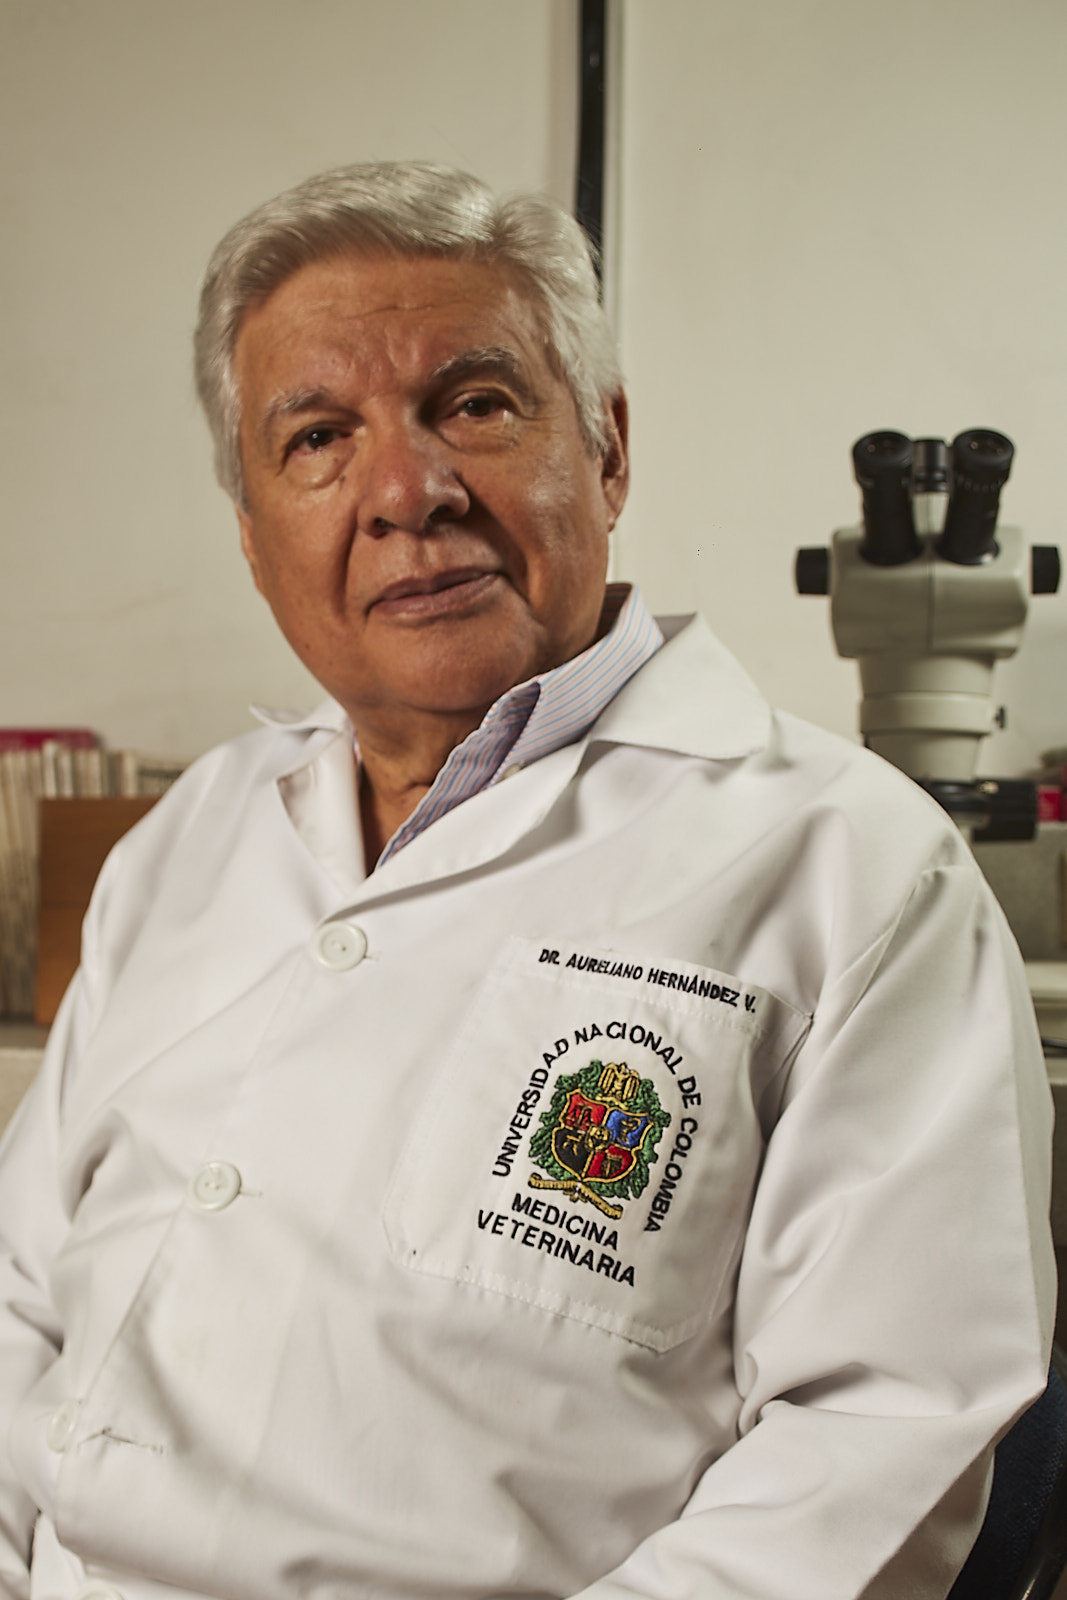 Aureliano Hernández Vásquez